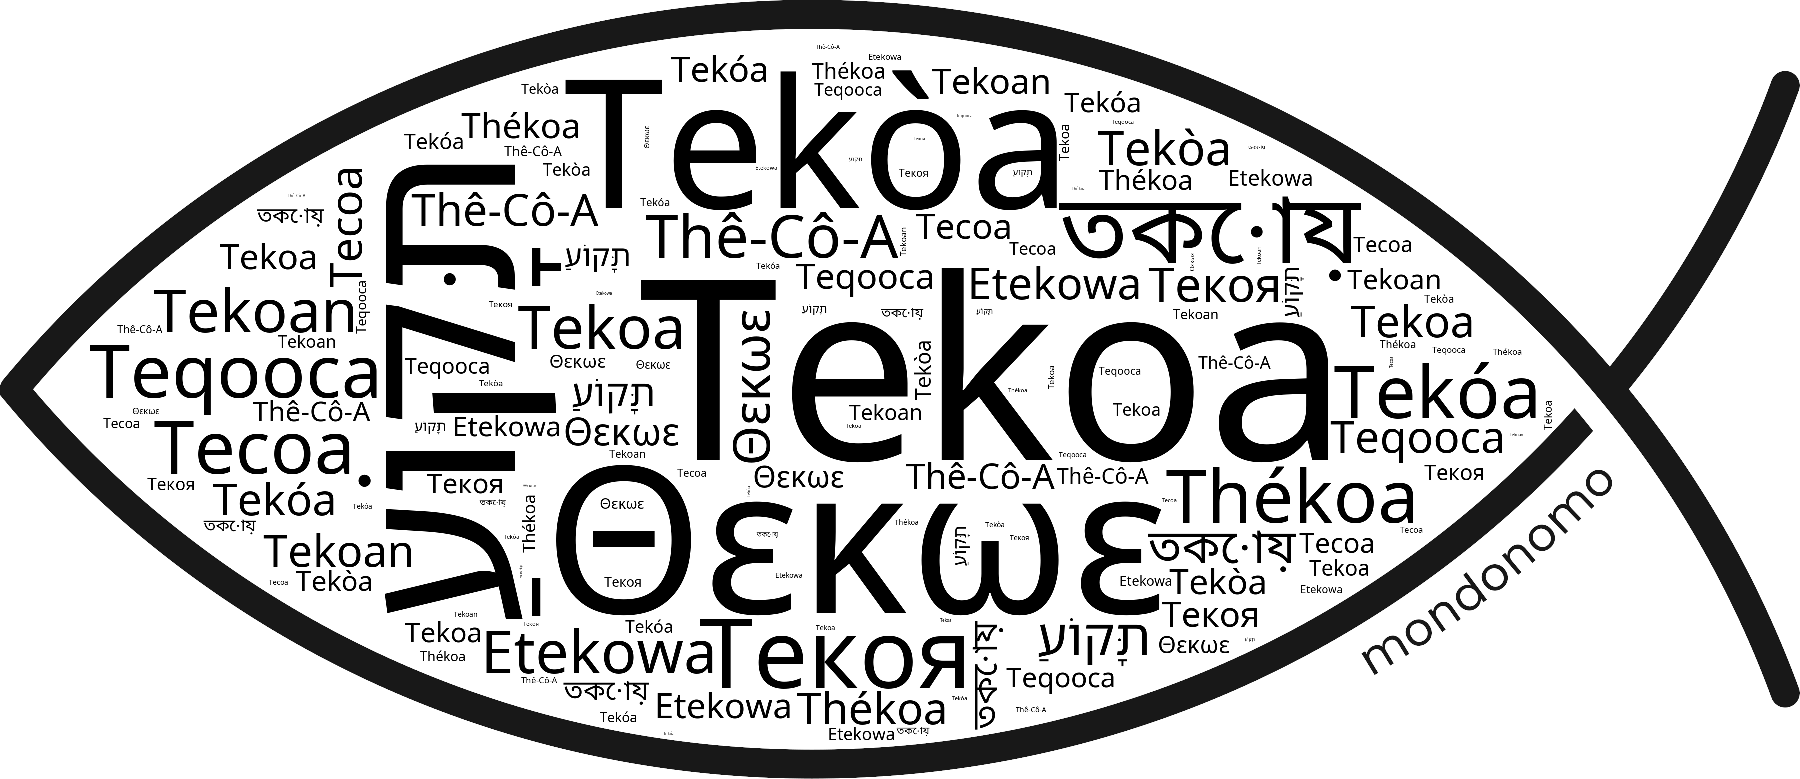 Name Tekoa in the world's Bibles